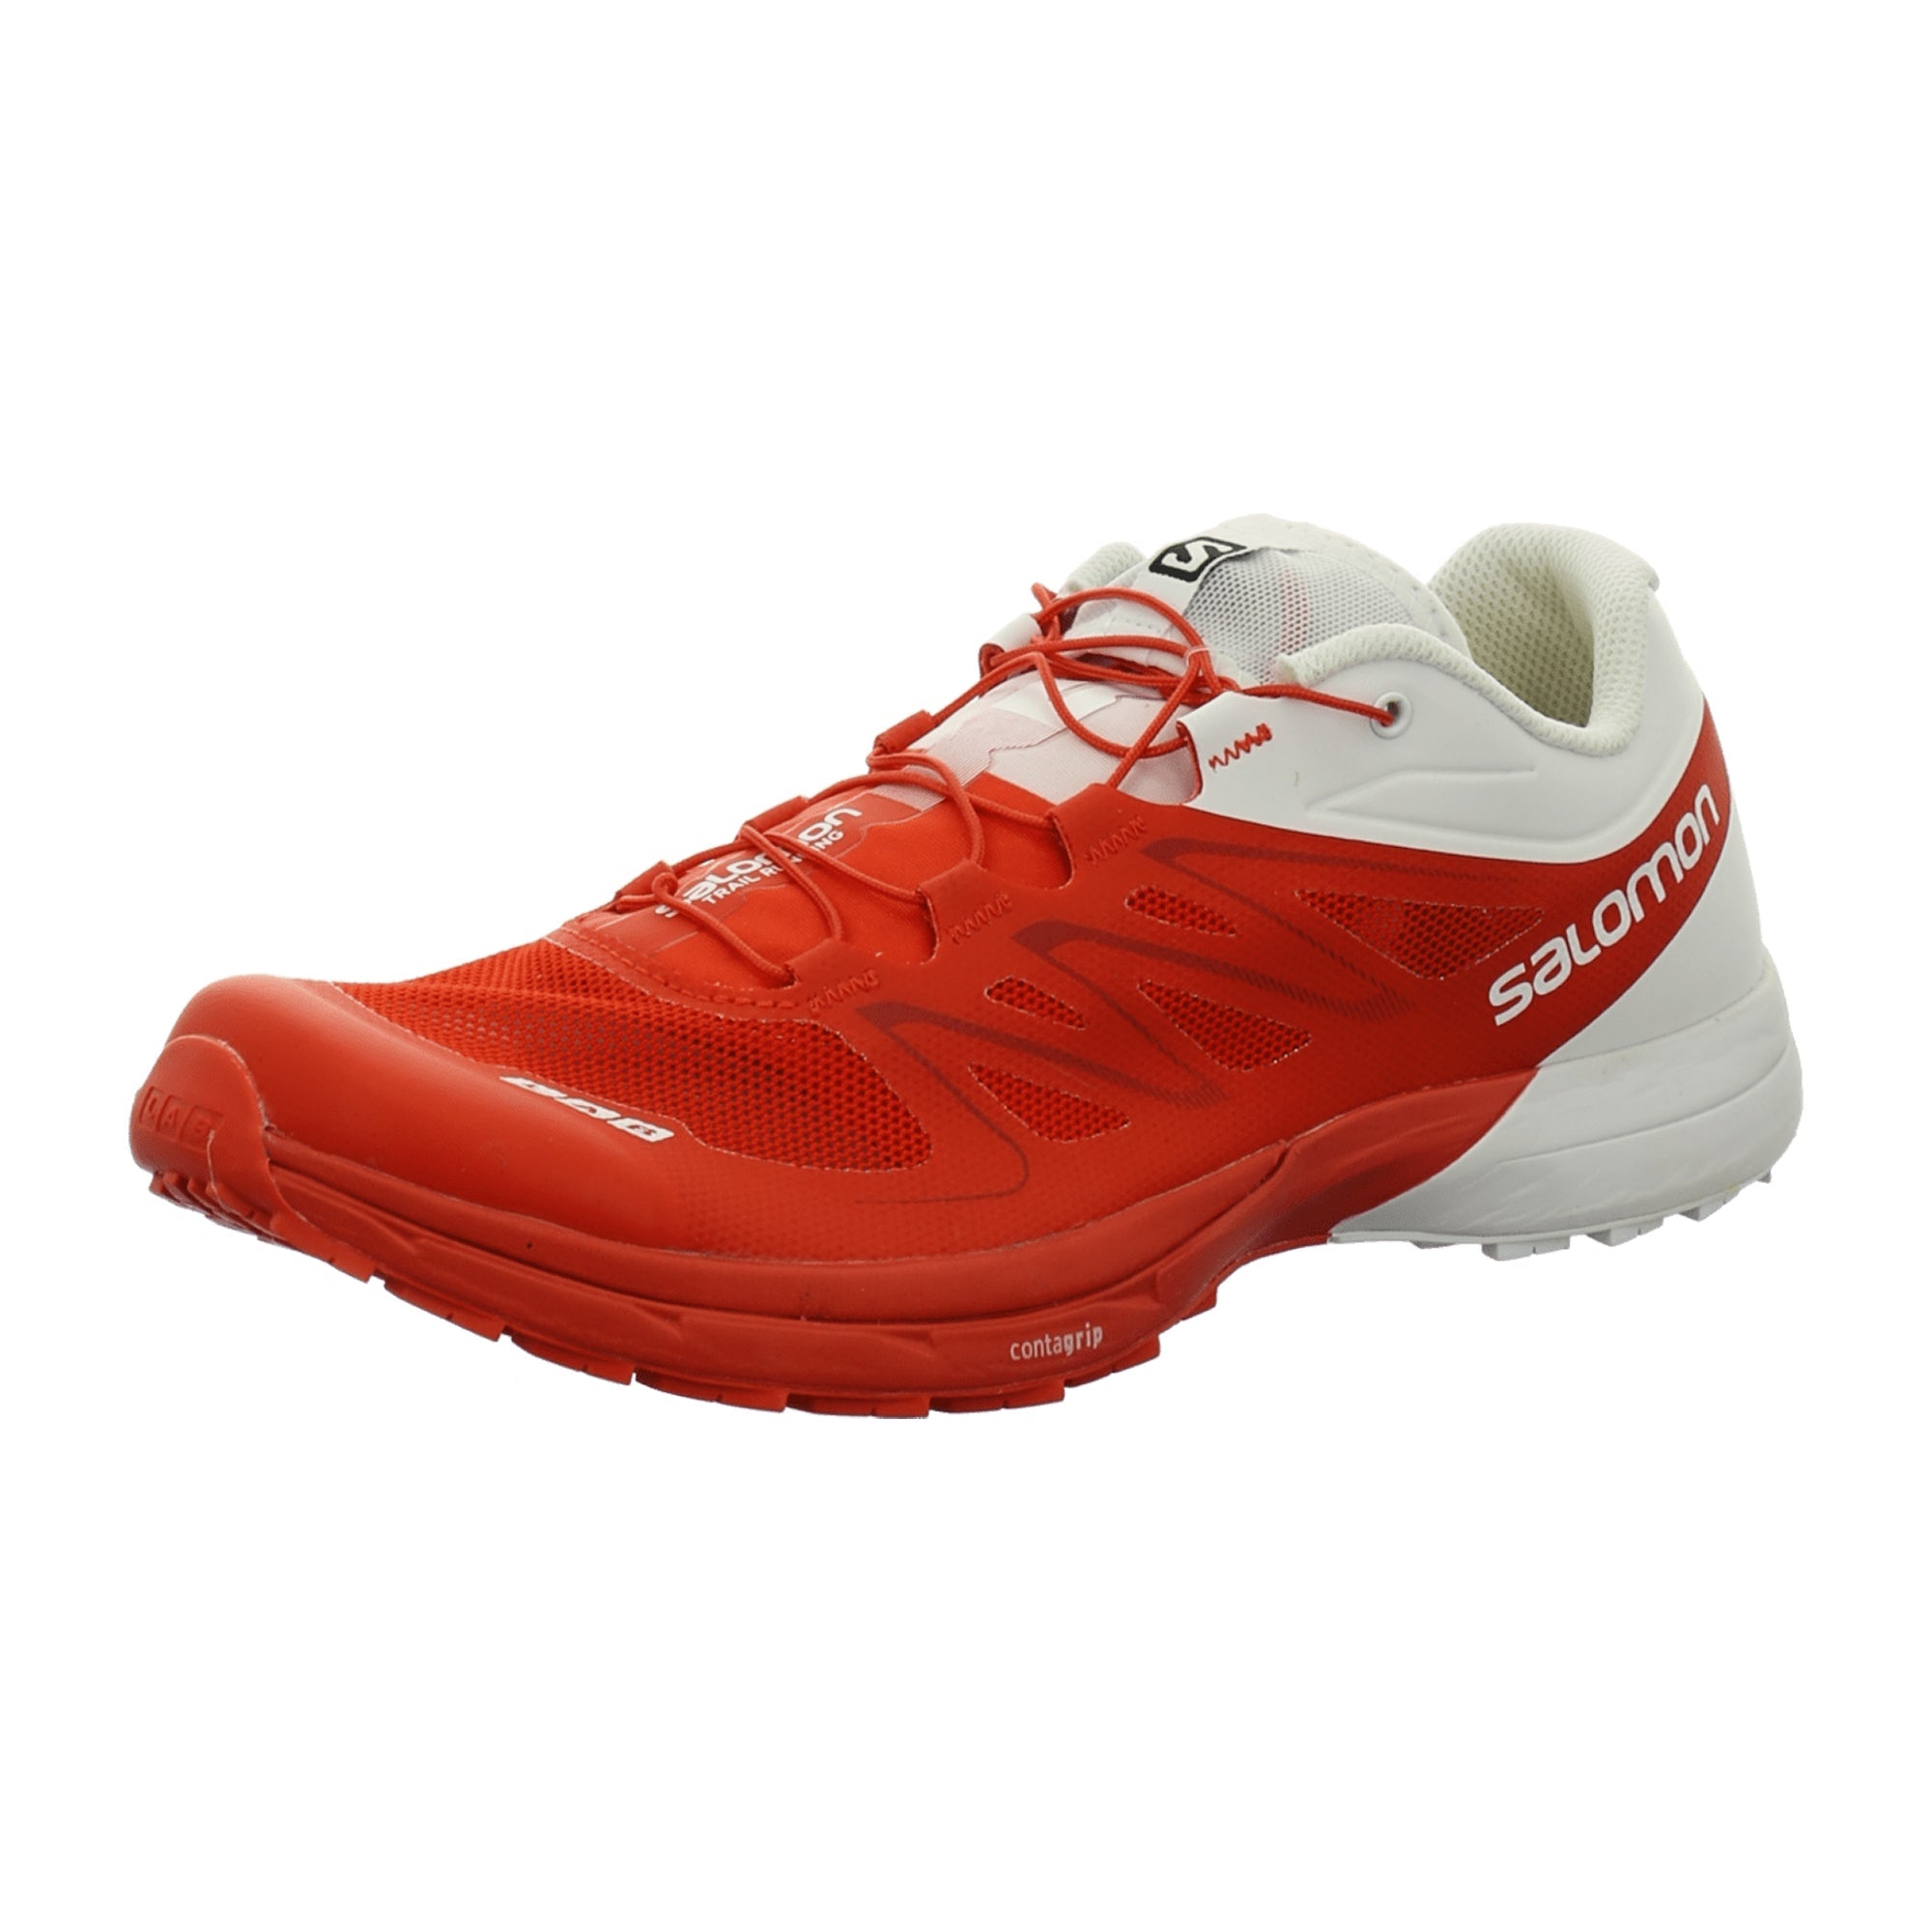 Salomon S-Lab Sense 5 Ultra for men, red, shoes